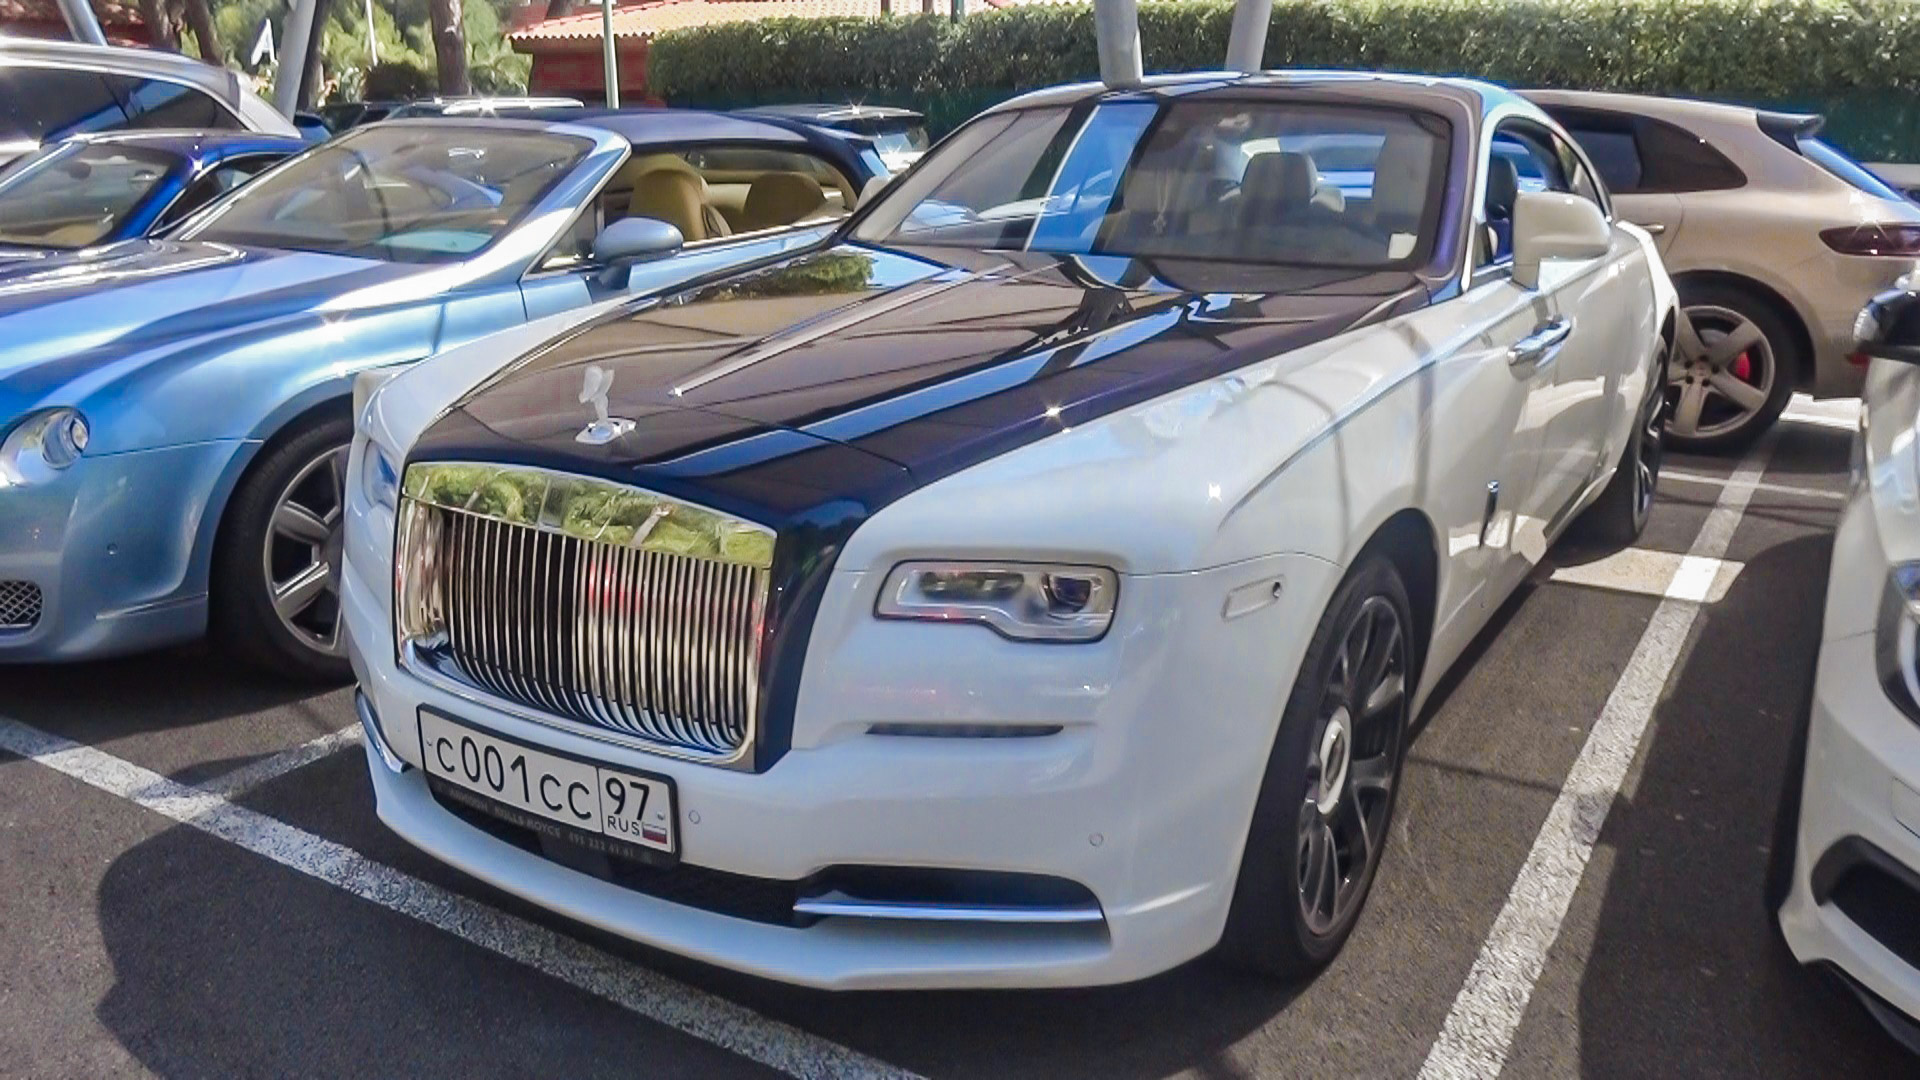 Rolls Royce Wraith - C-001-CC-97 (RUS)